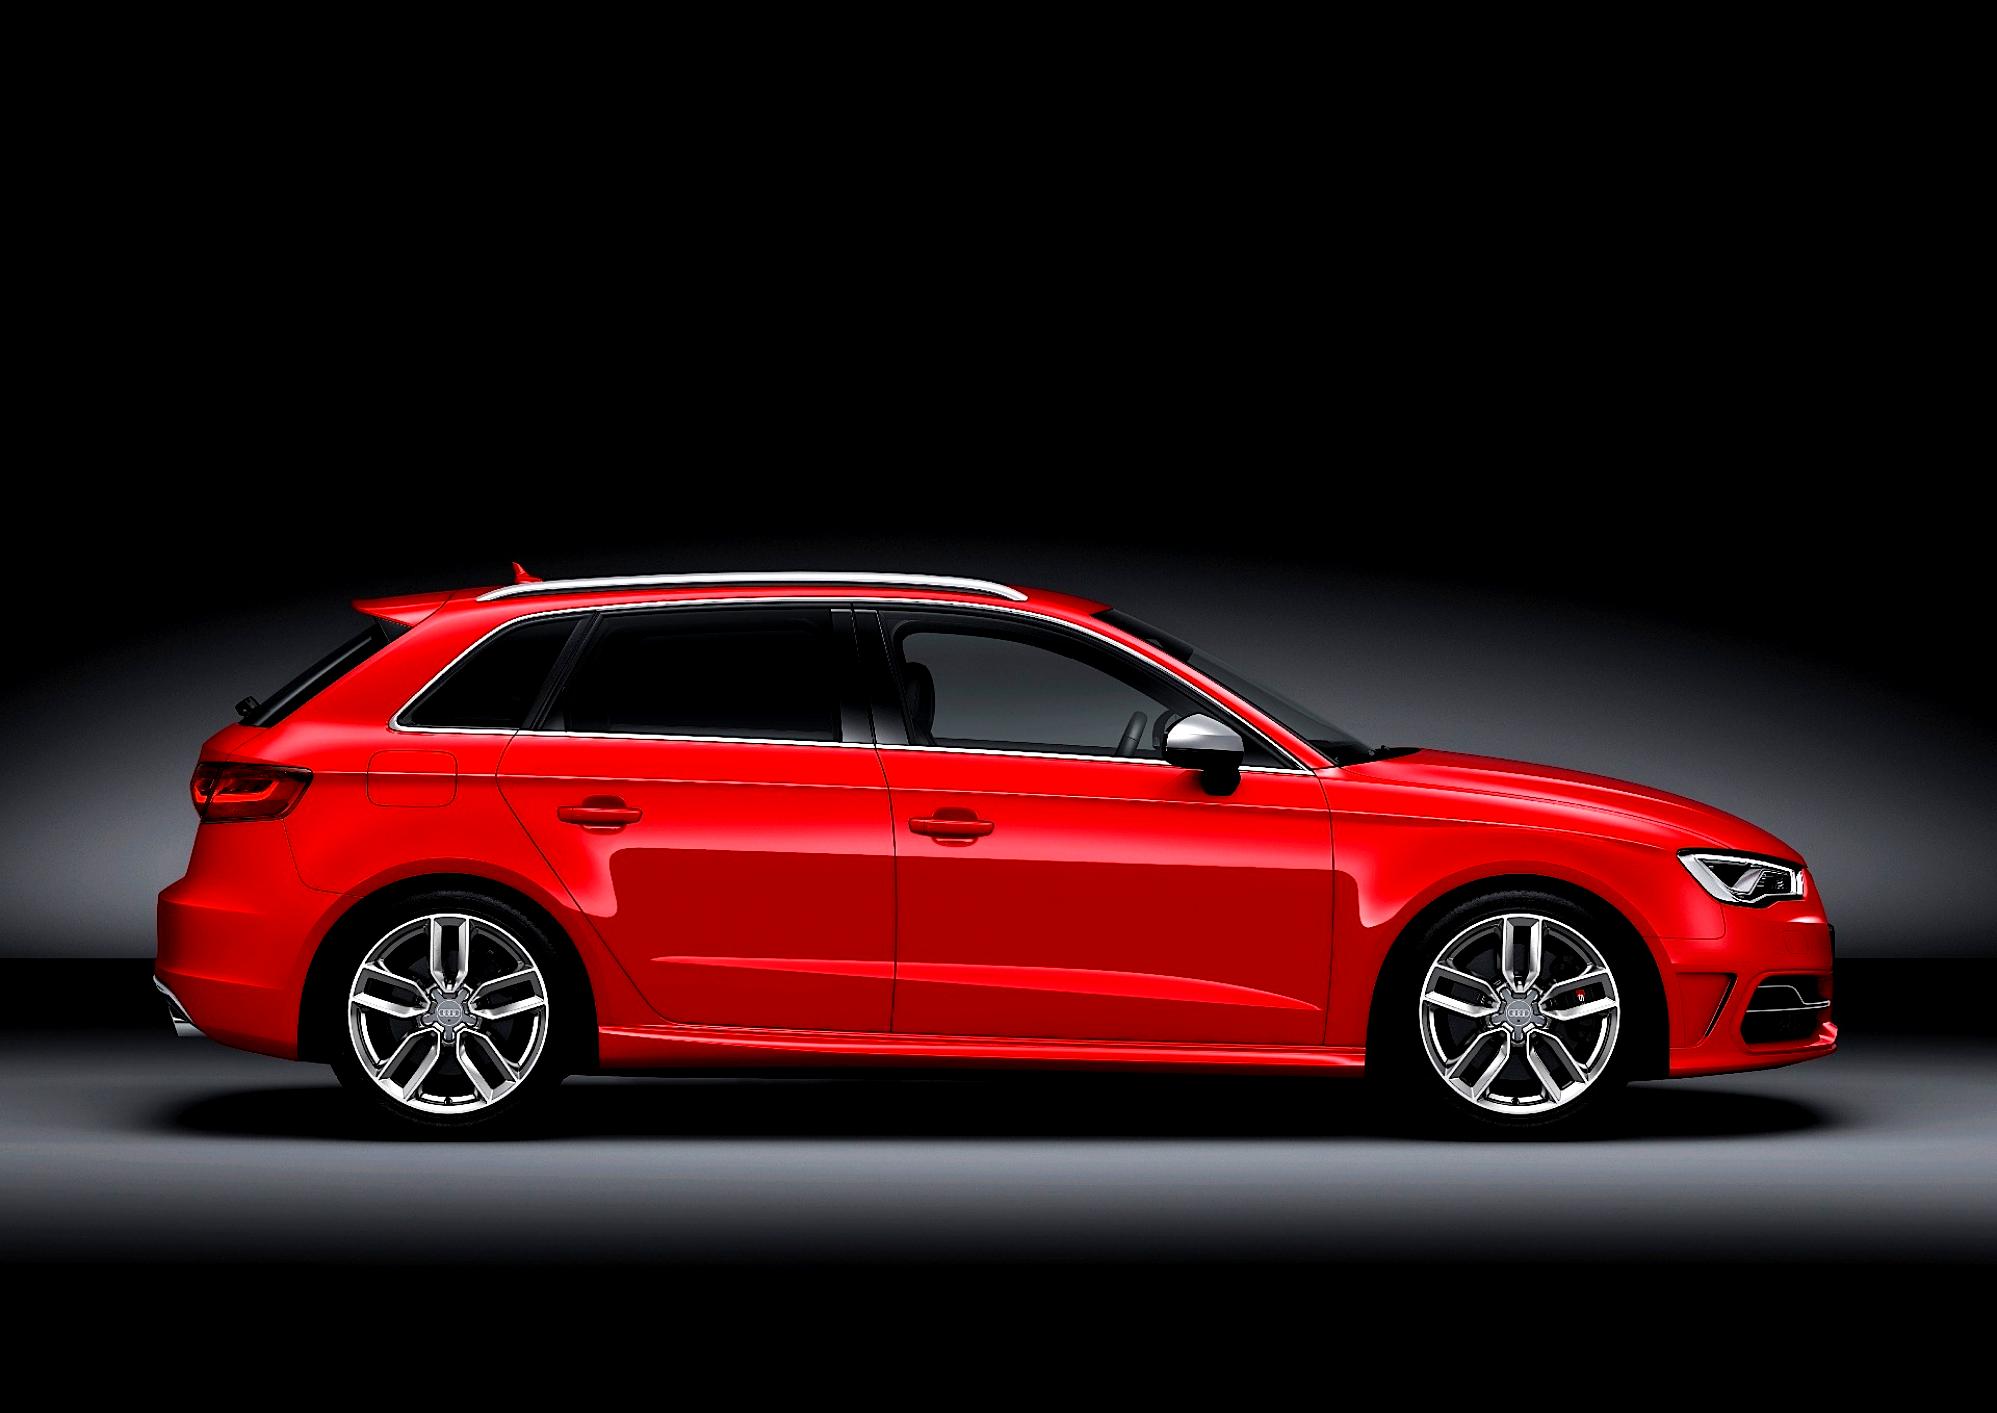 Audi S3 Sportback 2013 #2